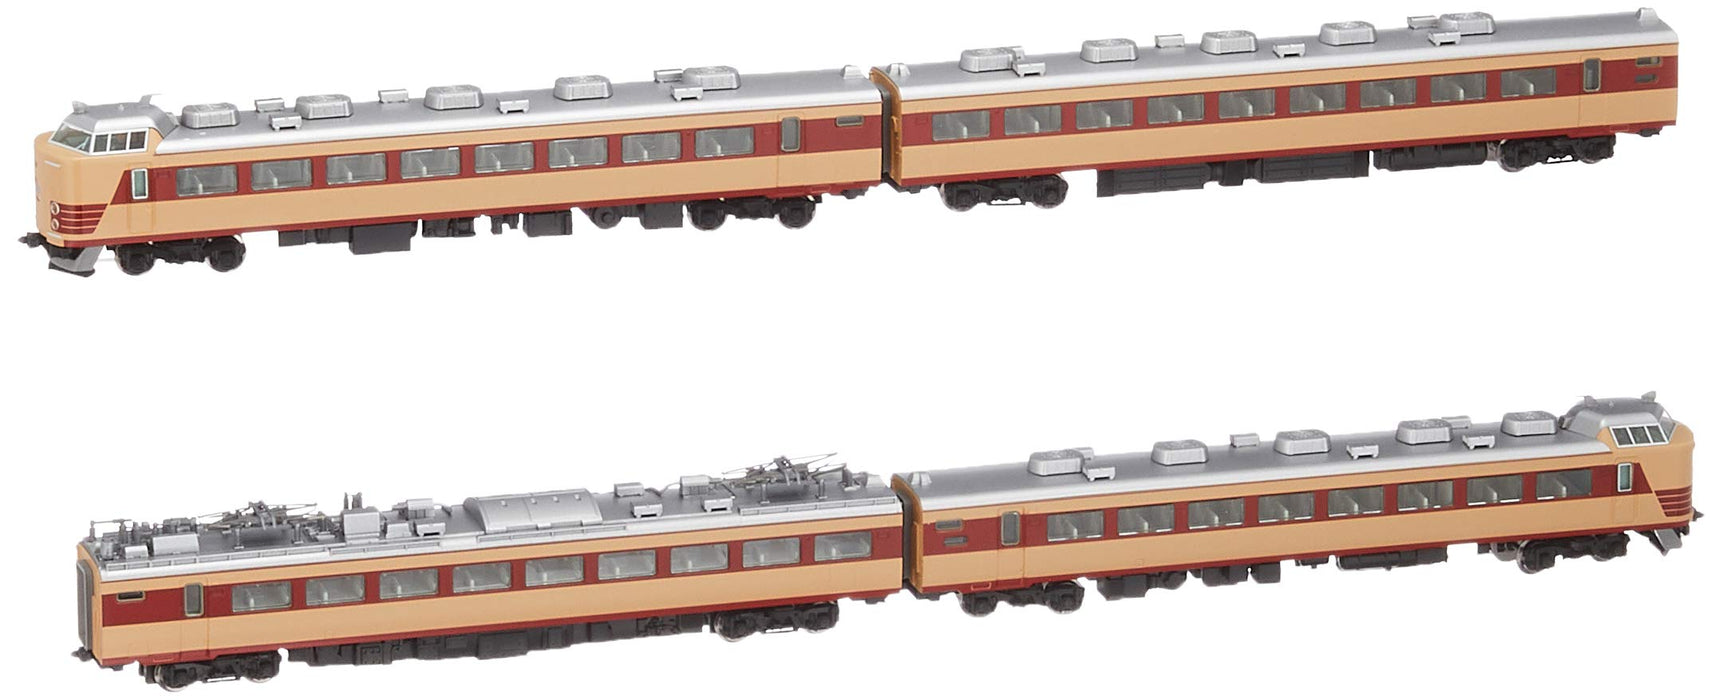 Tomytec Tomix N Gauge 485 200 Series Basic Railway Model Train Set 92425